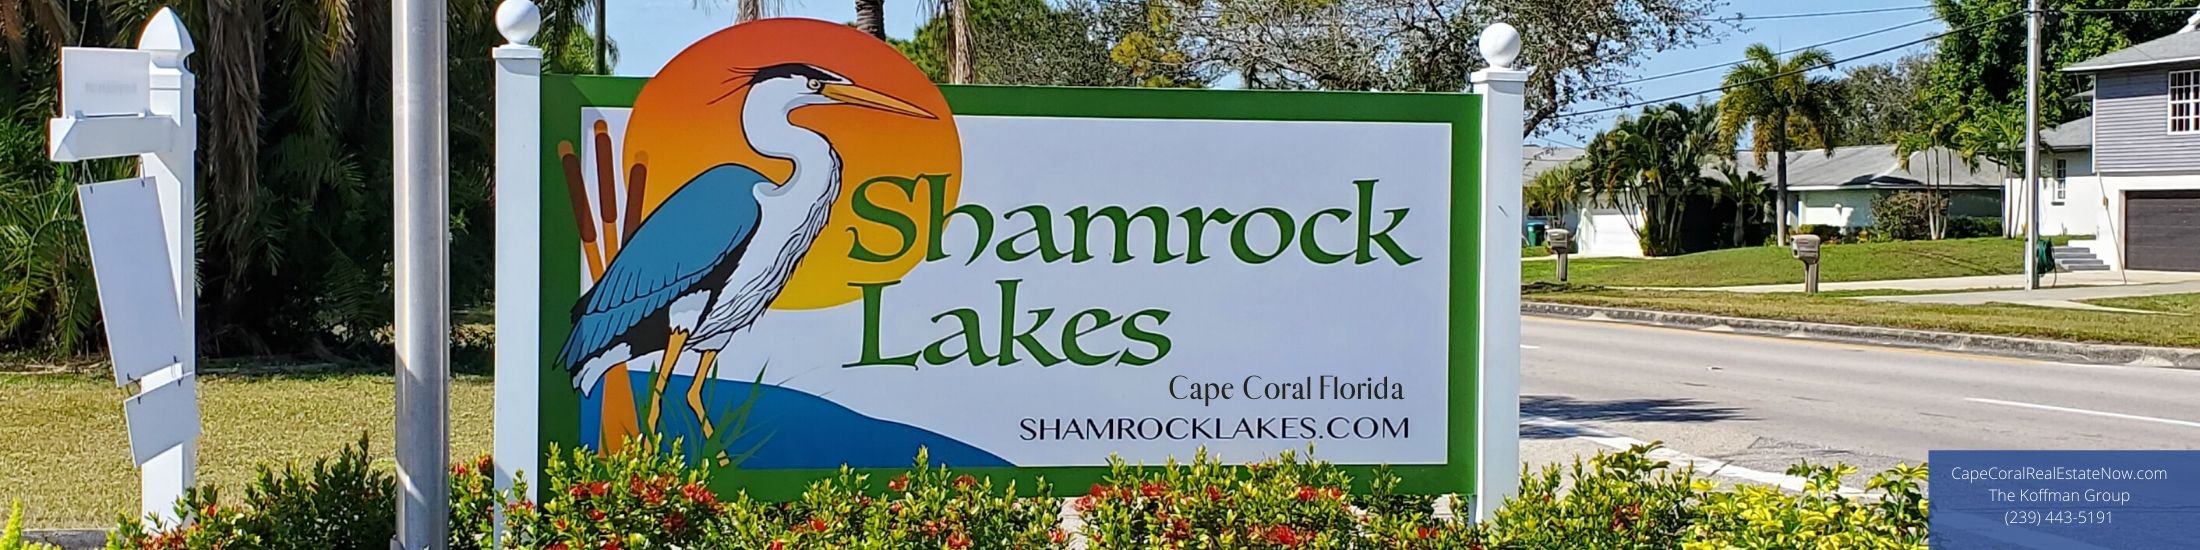 Shamrock Lakes Homes for Sale